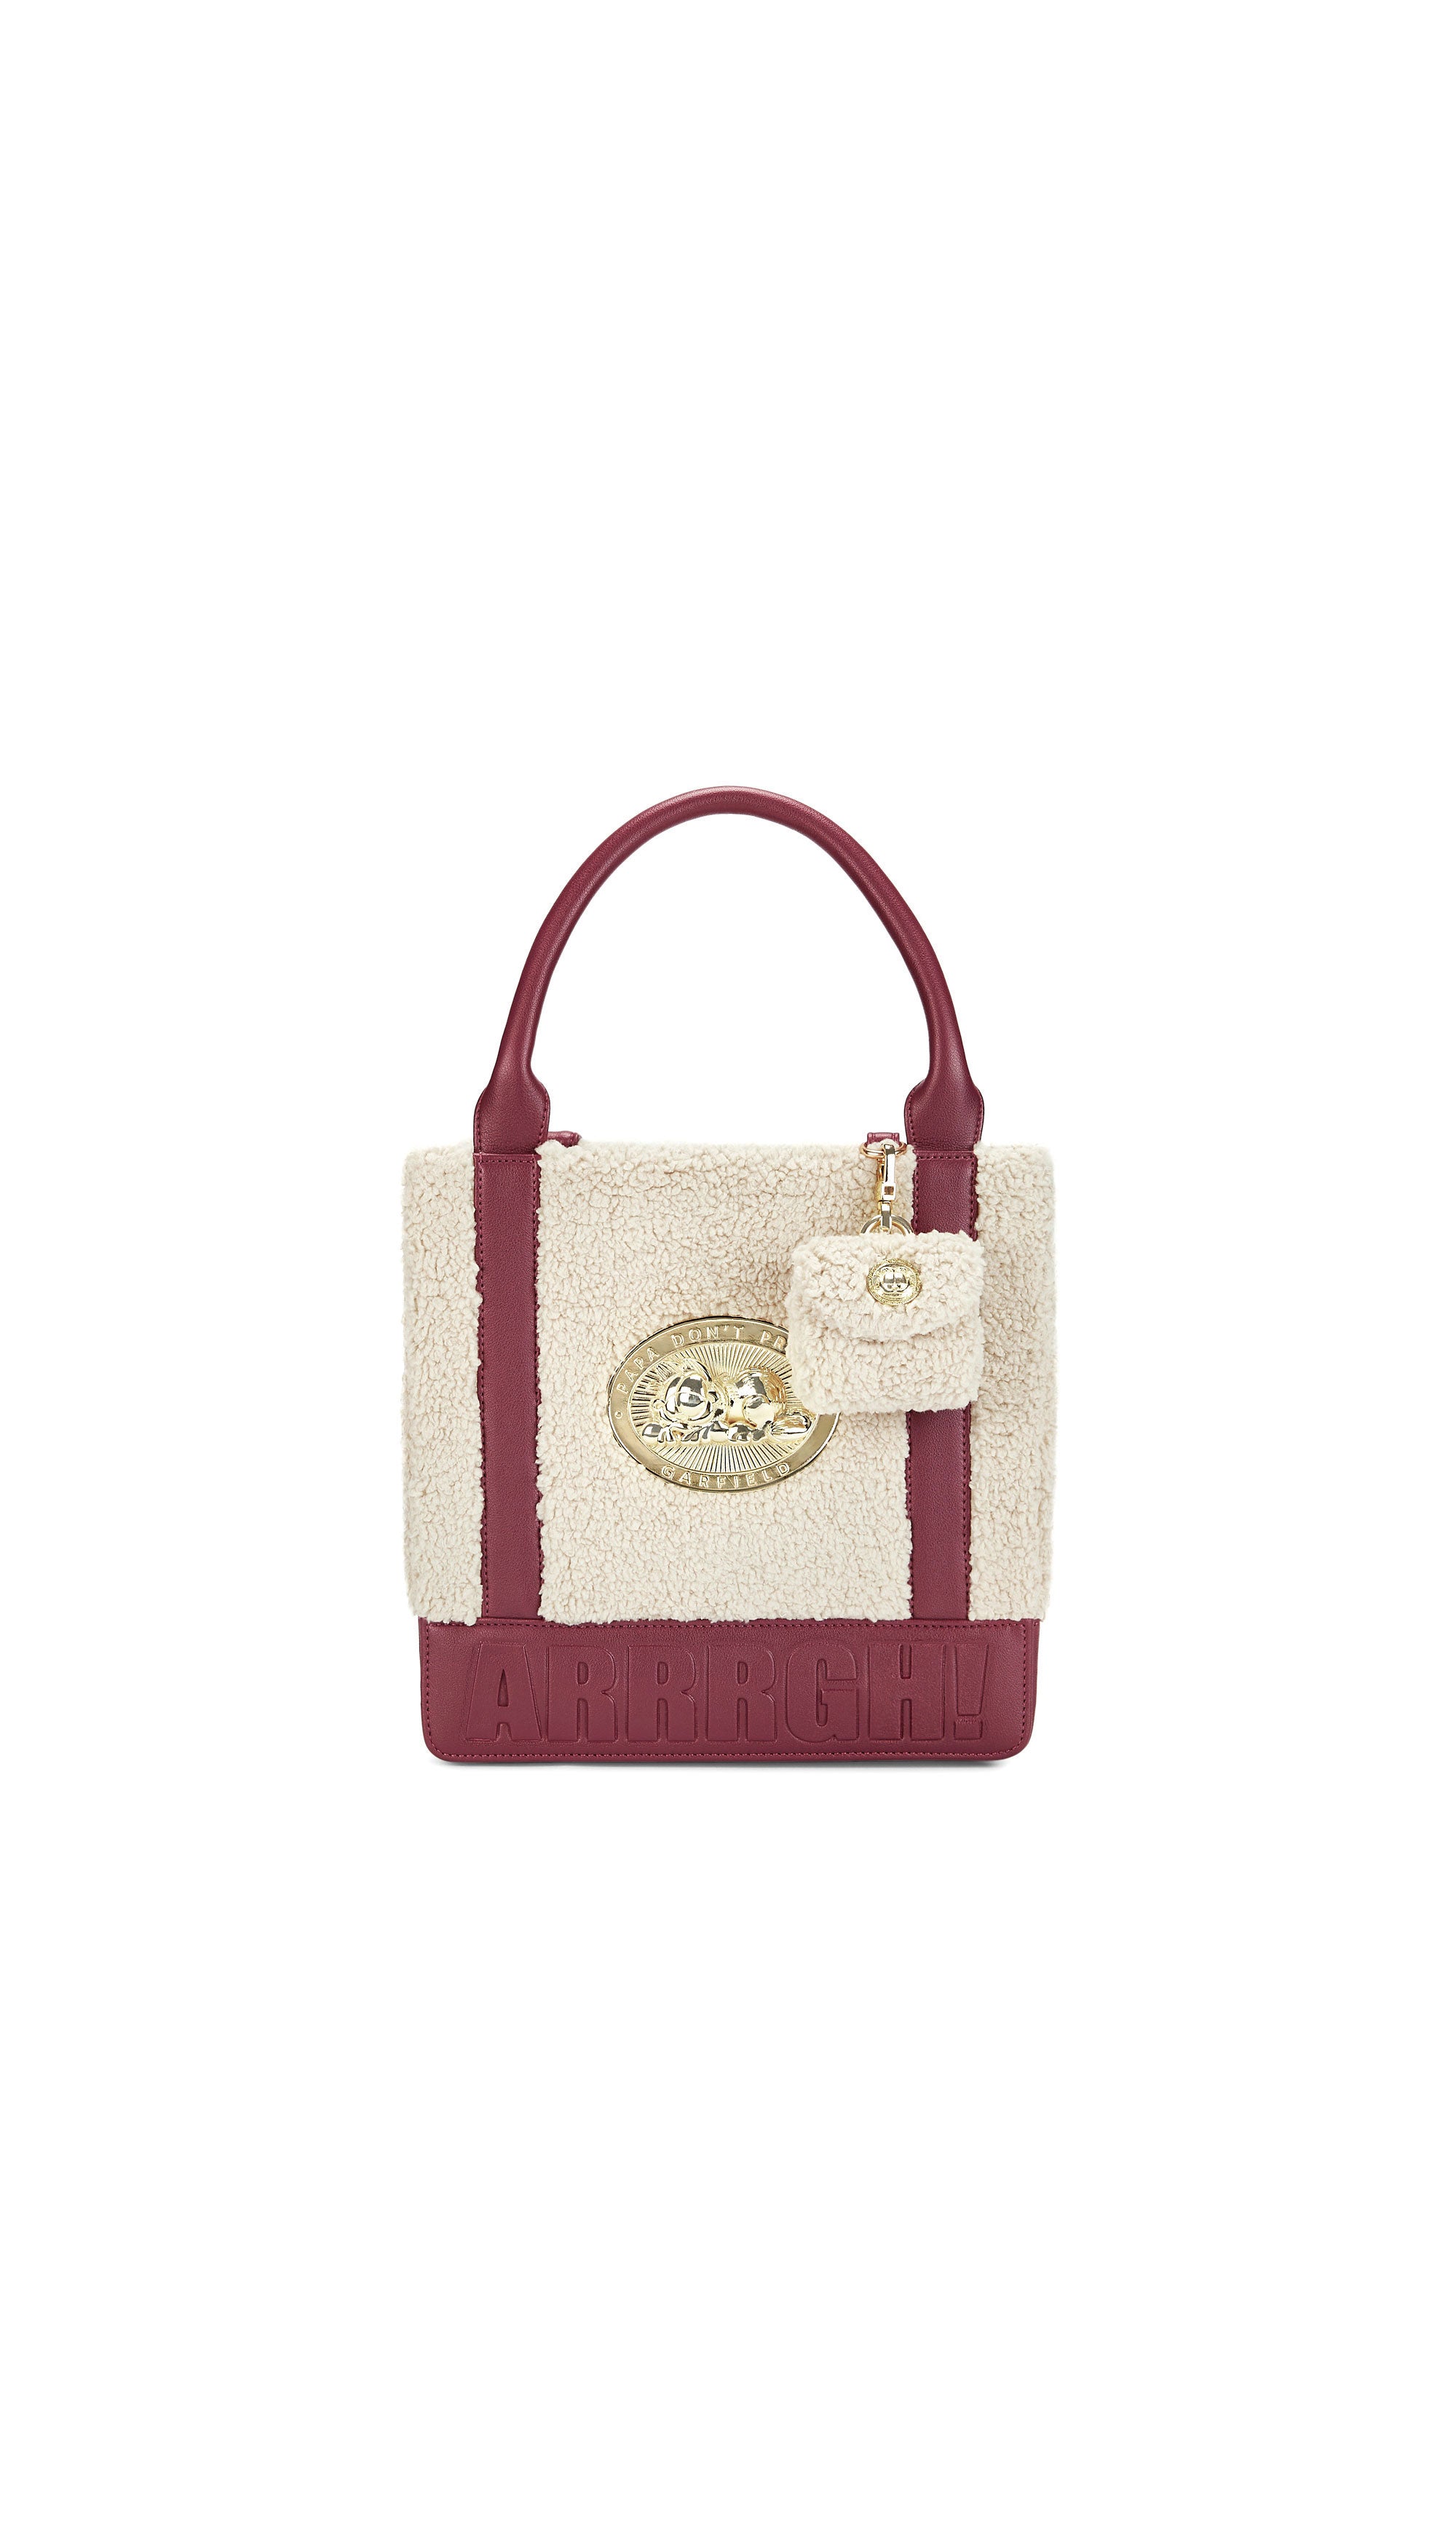 Premium Designer Handbags : Buy Designer Bags & Handbags Online India -  Amazon.in